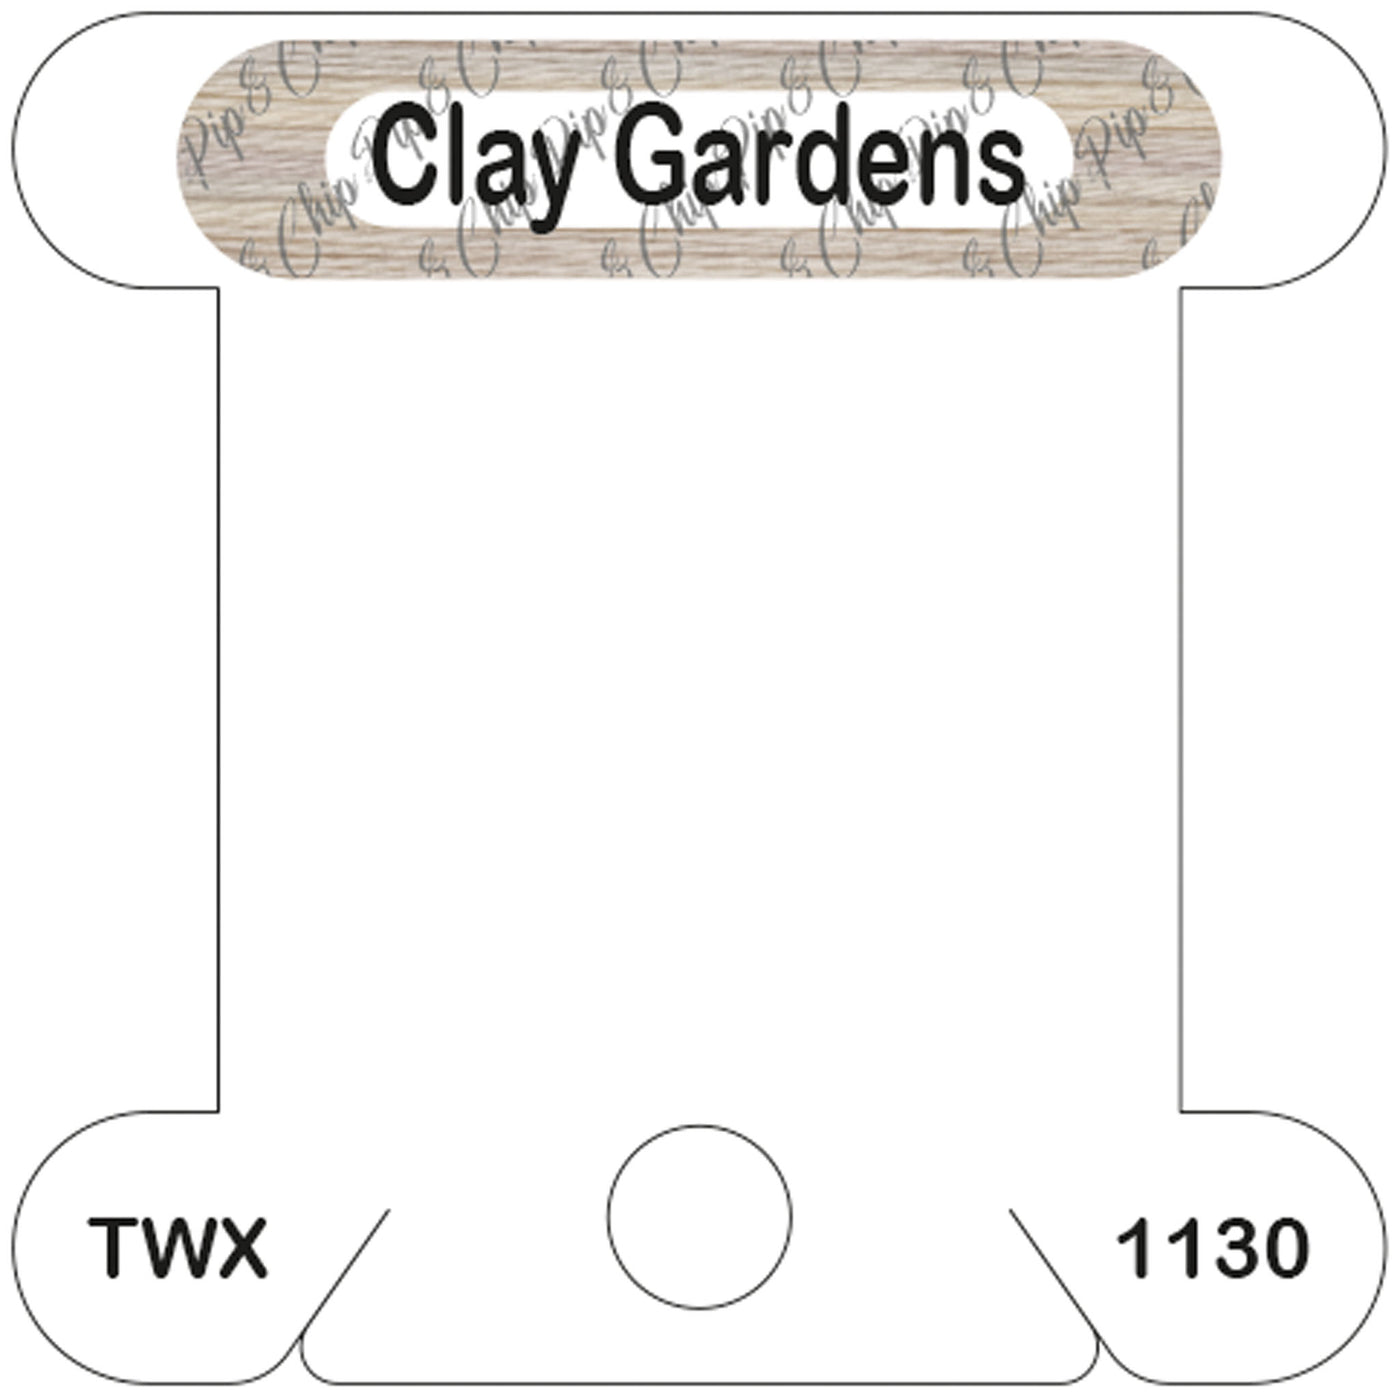 ThreadworX Clay Gardens acrylic bobbin